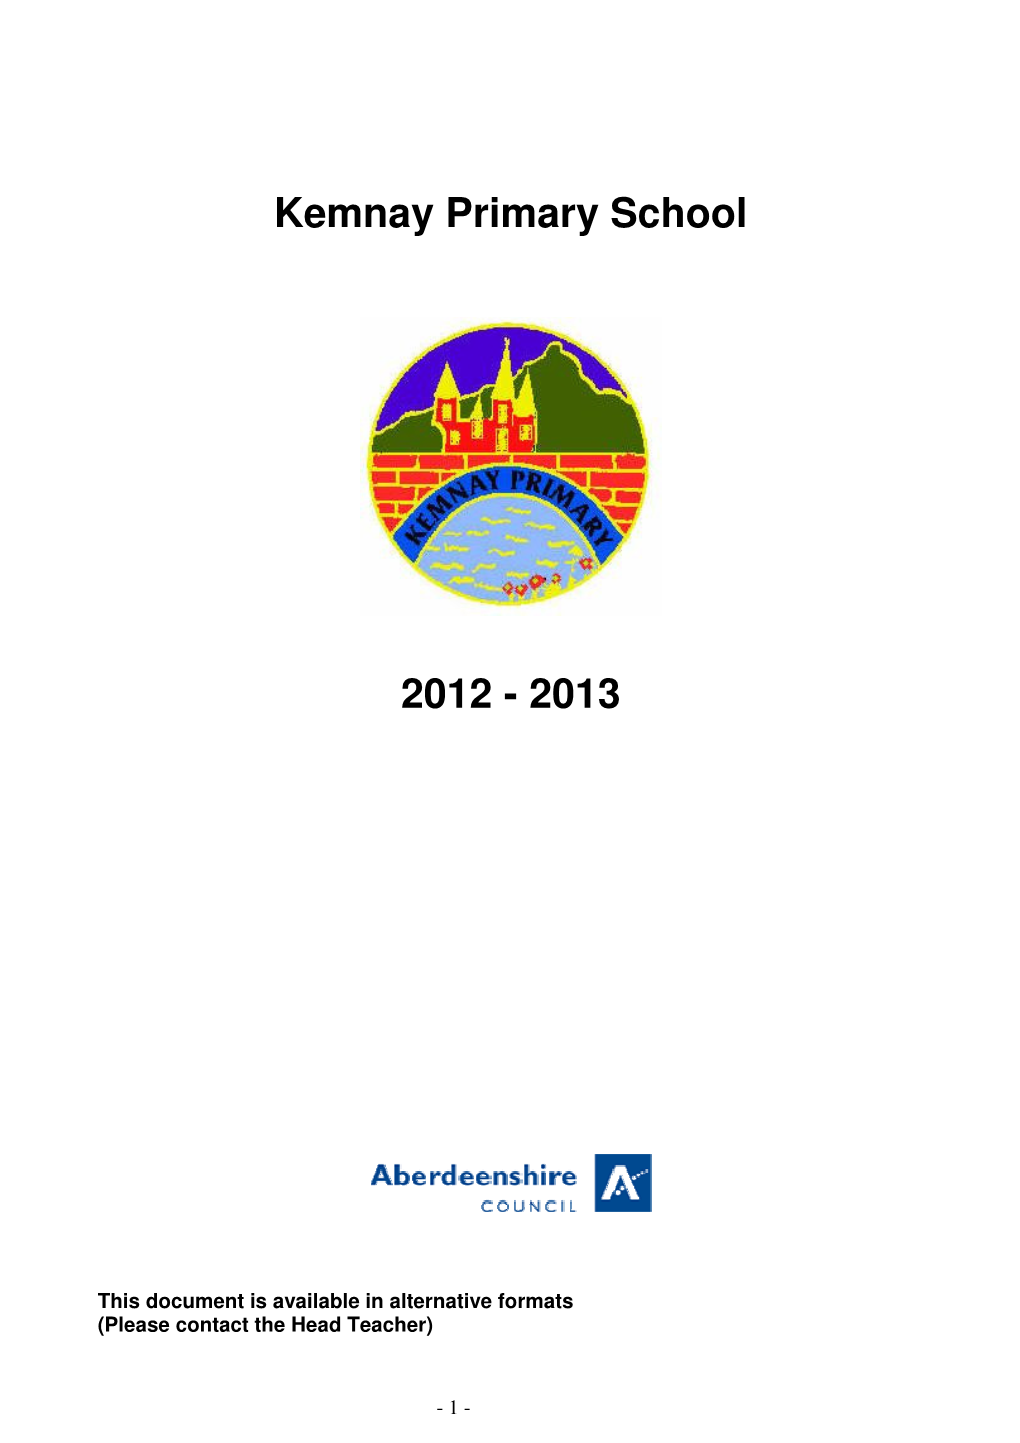 Kemnay Primary School 2012